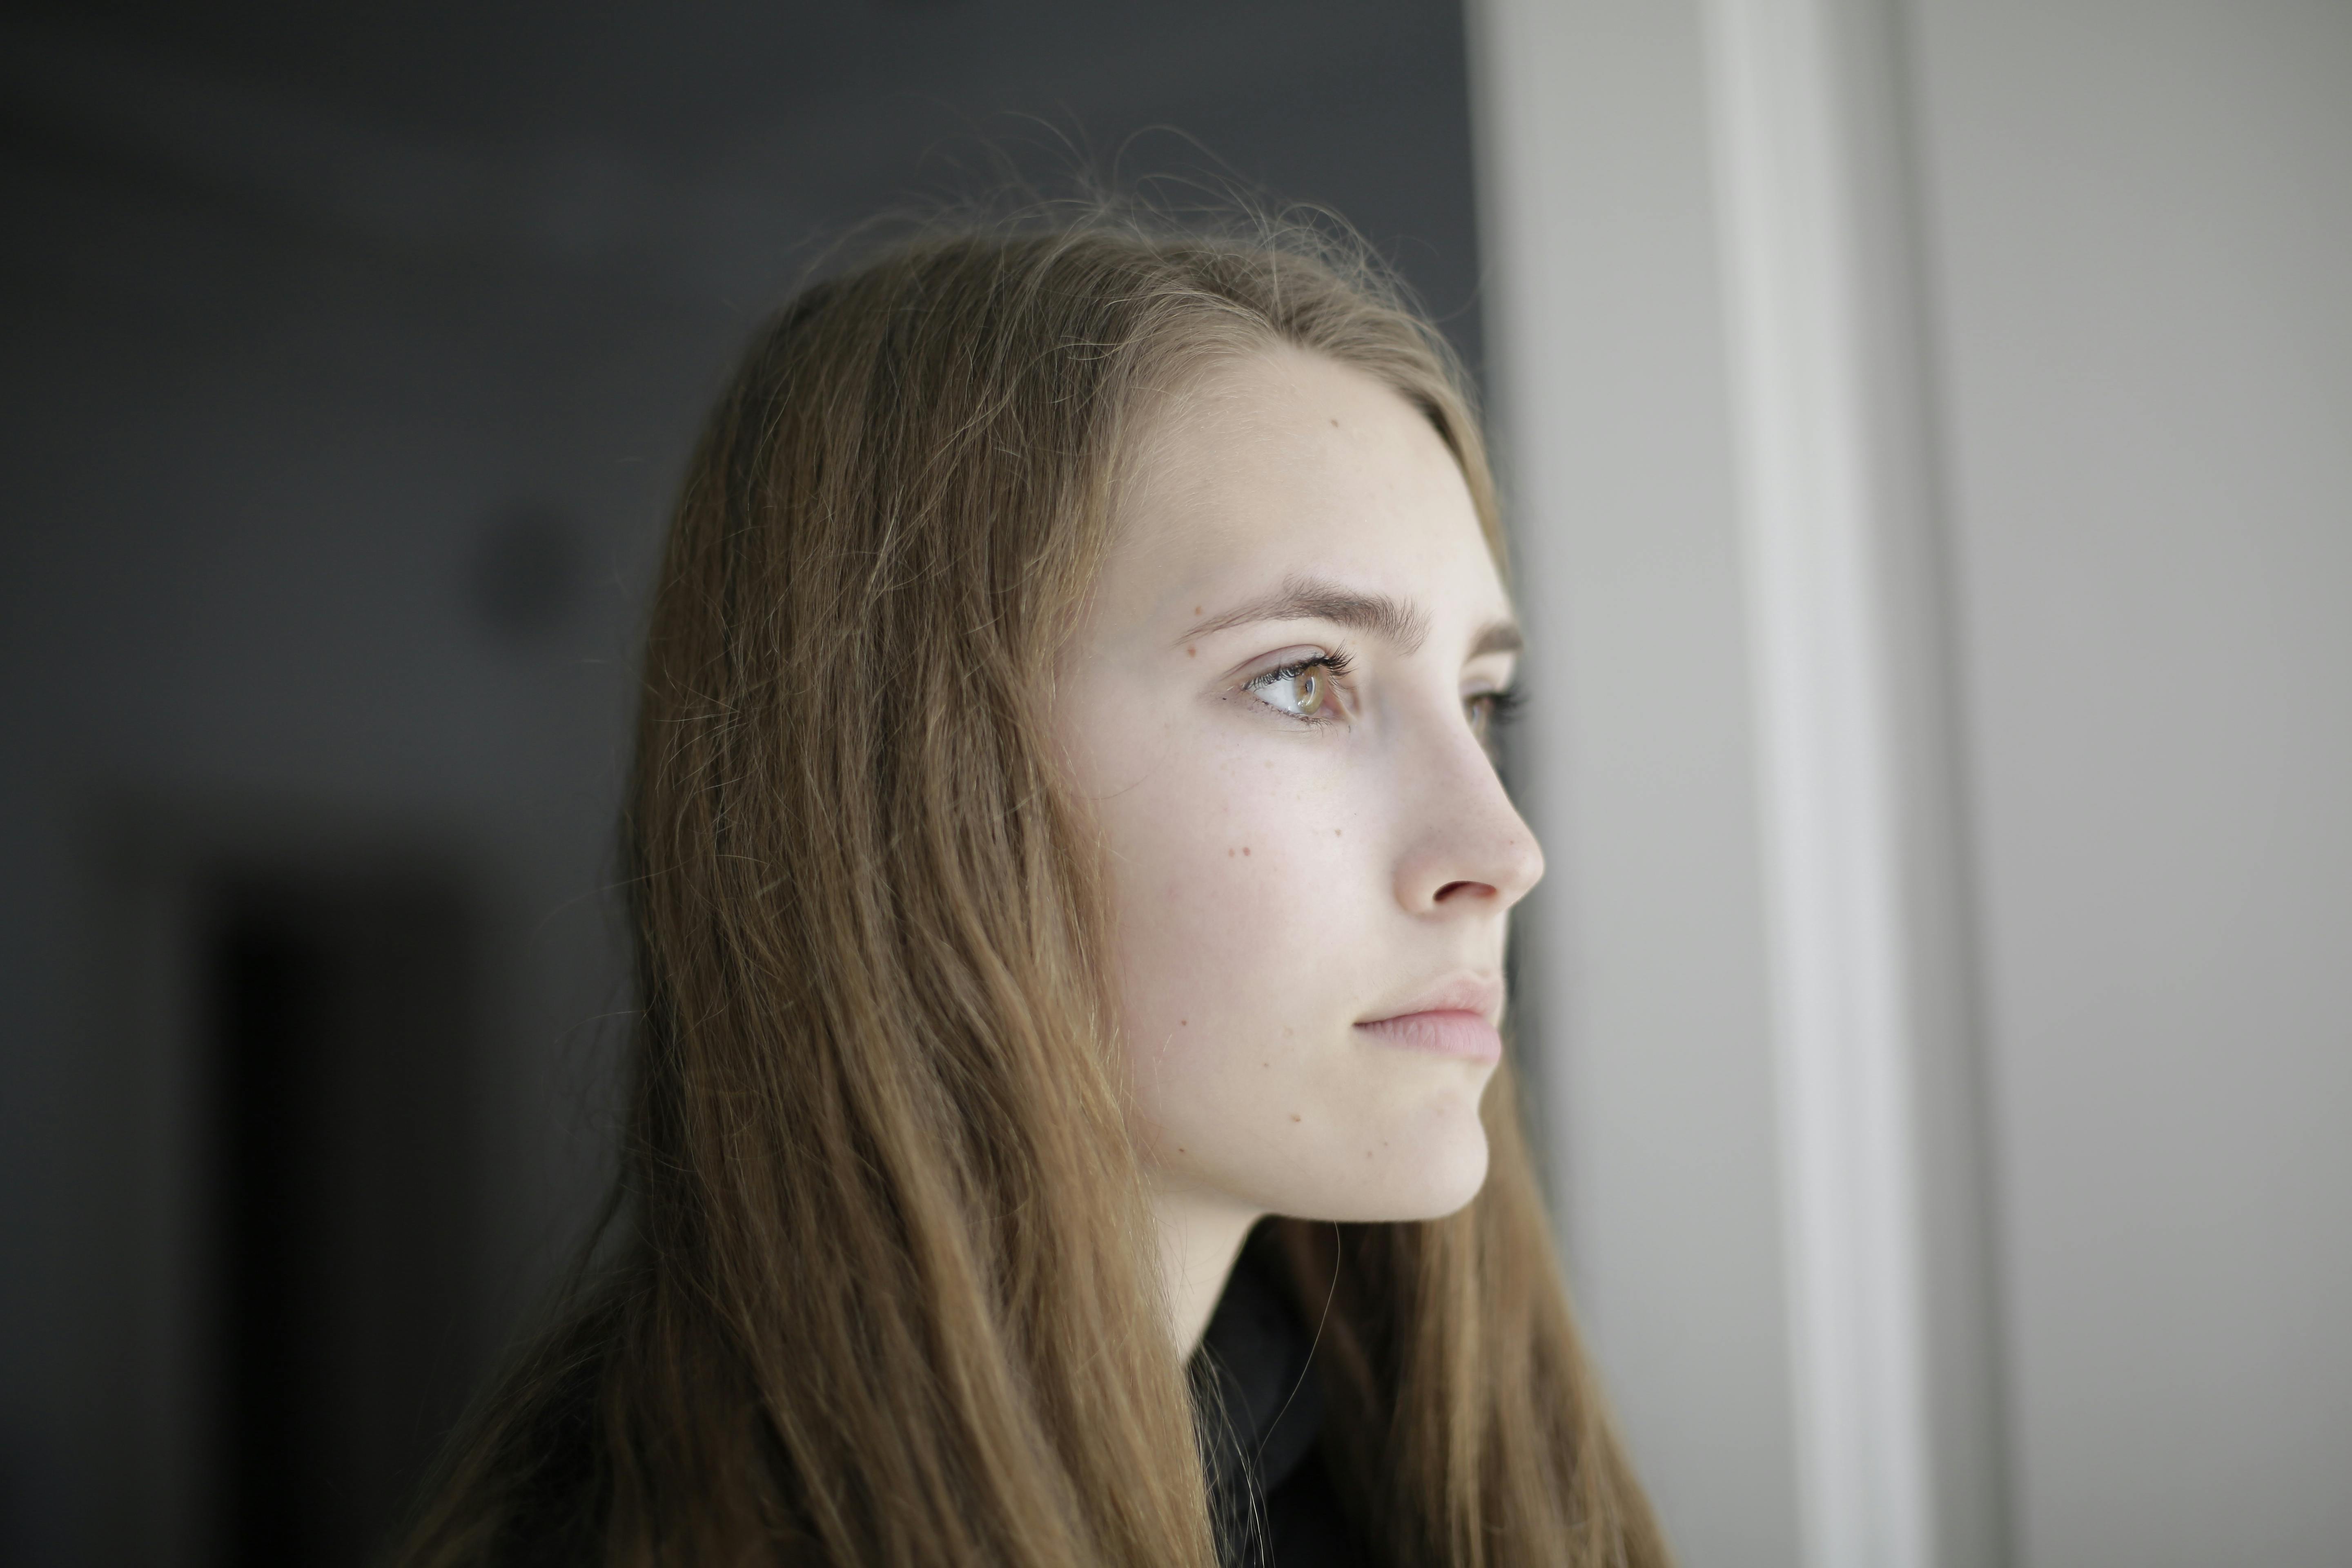 A pensive young woman  | Source: Pexels